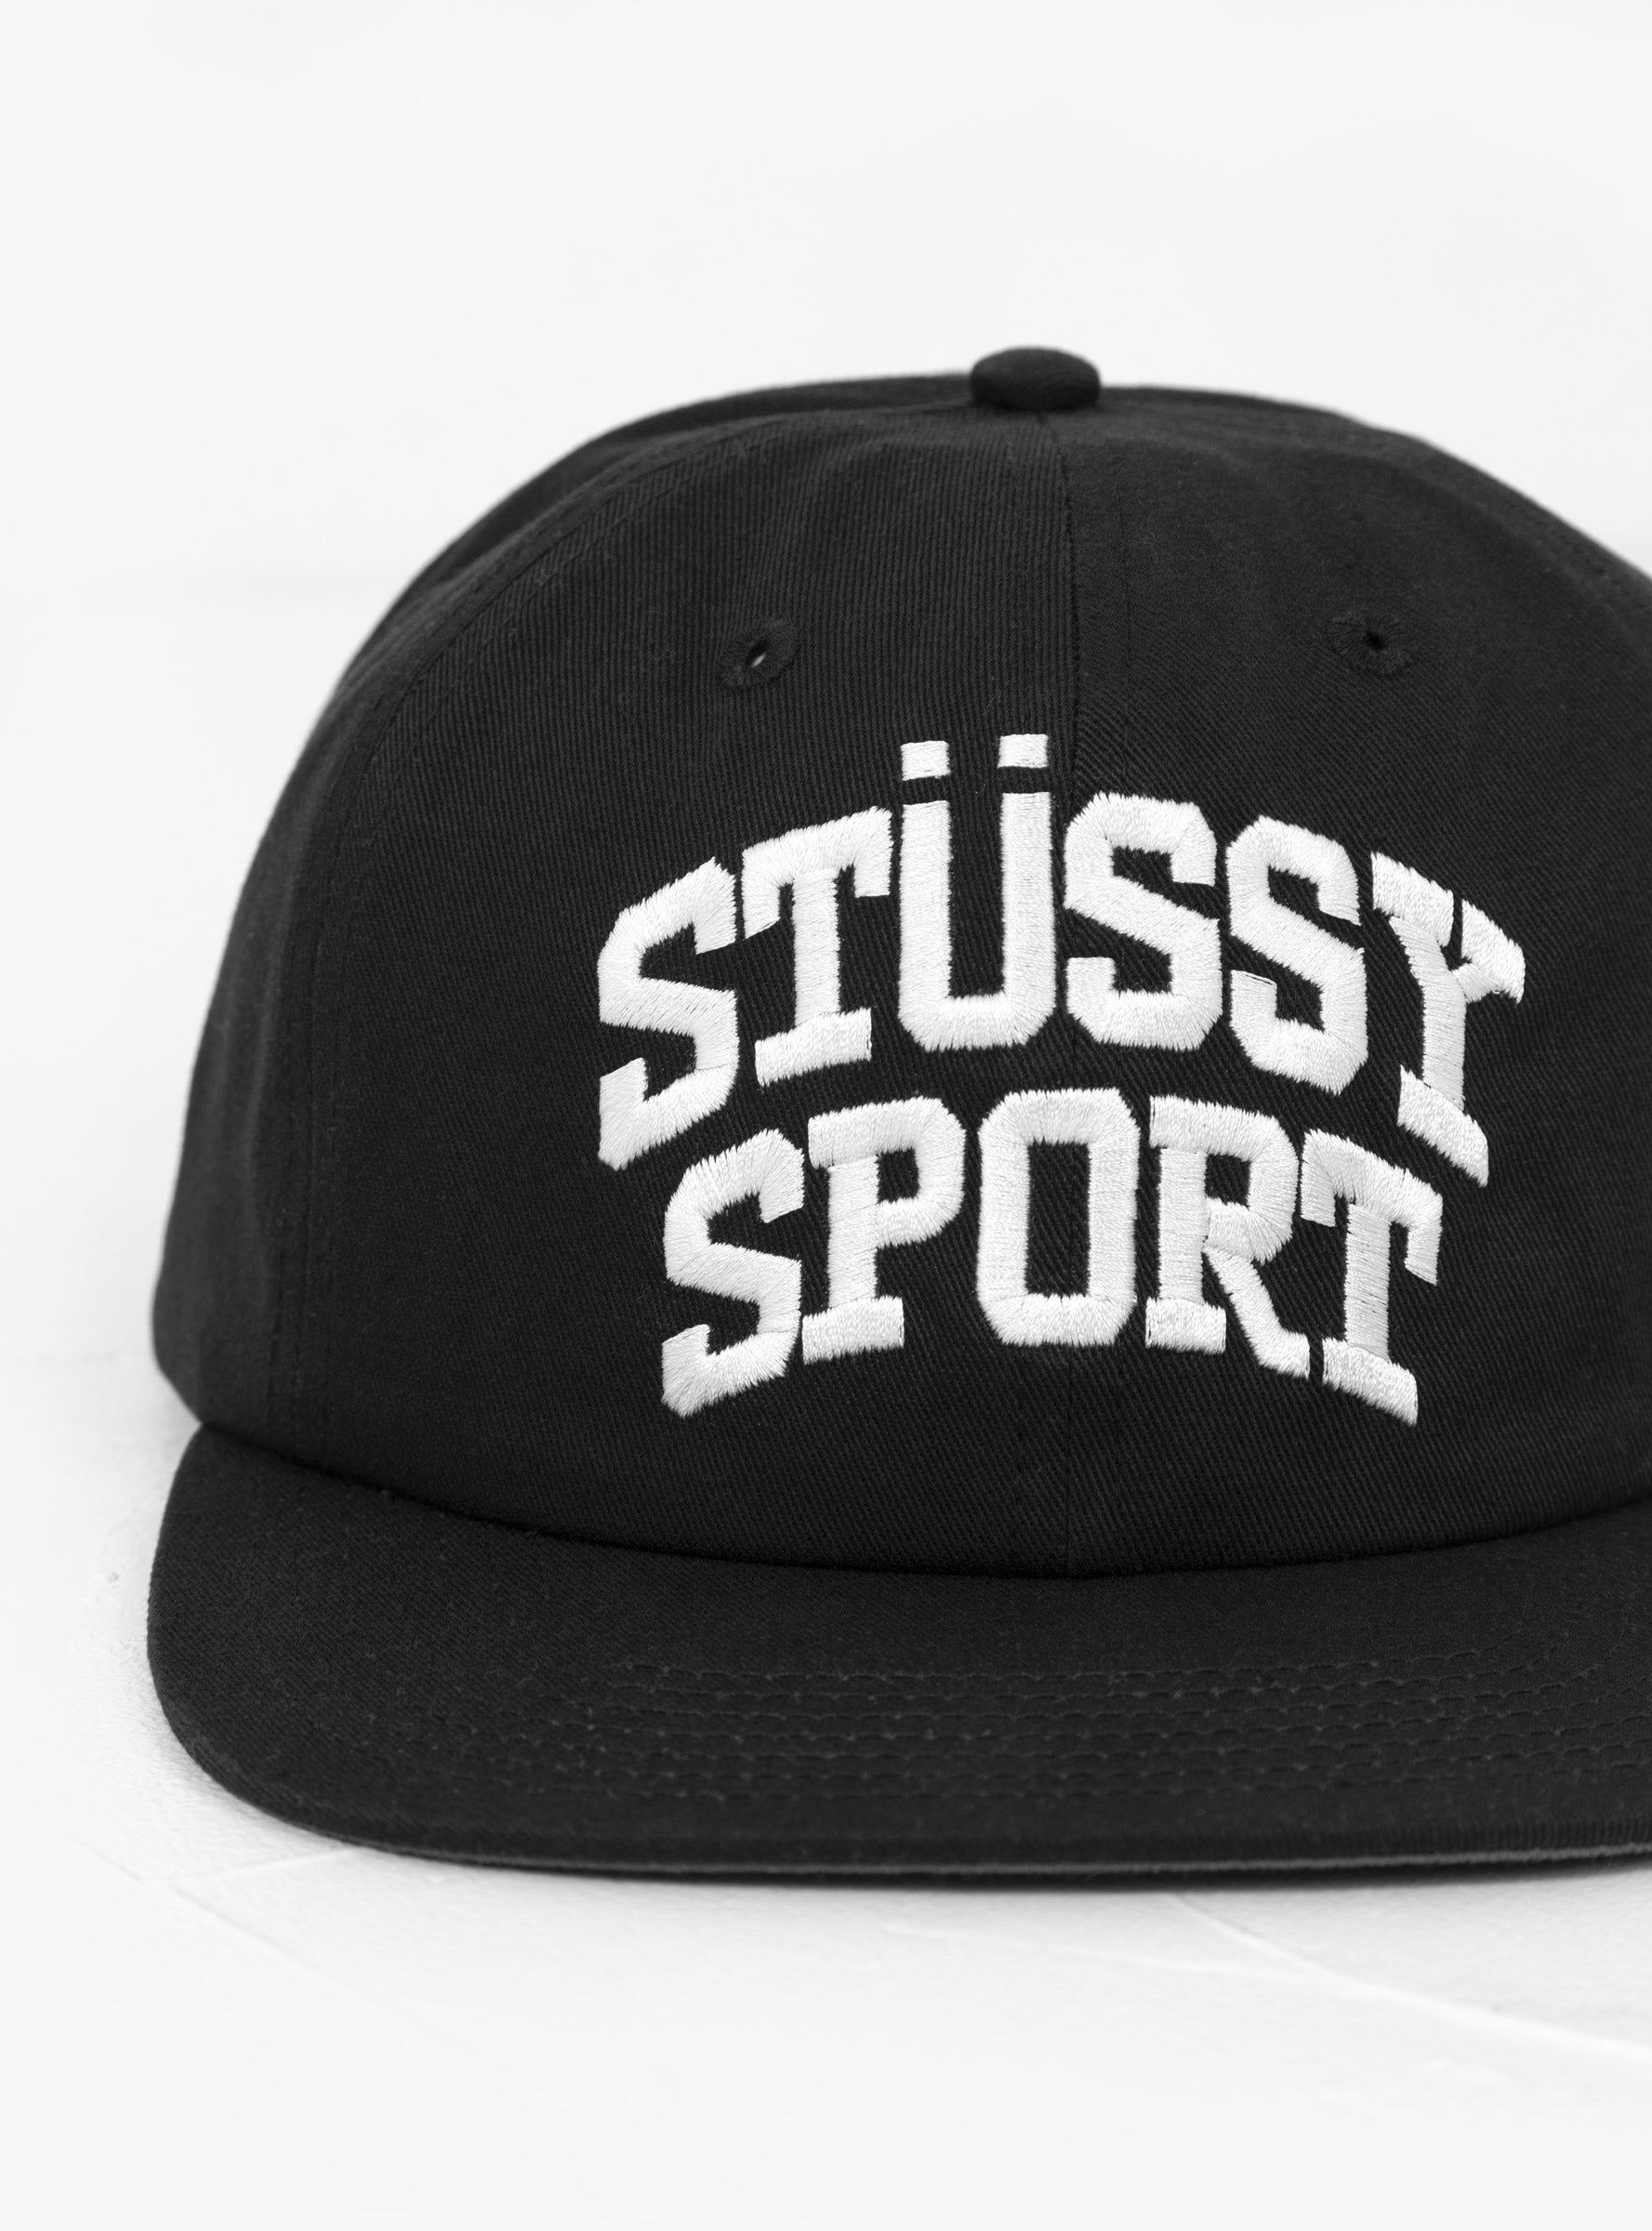 Stussy Sport Cap Black